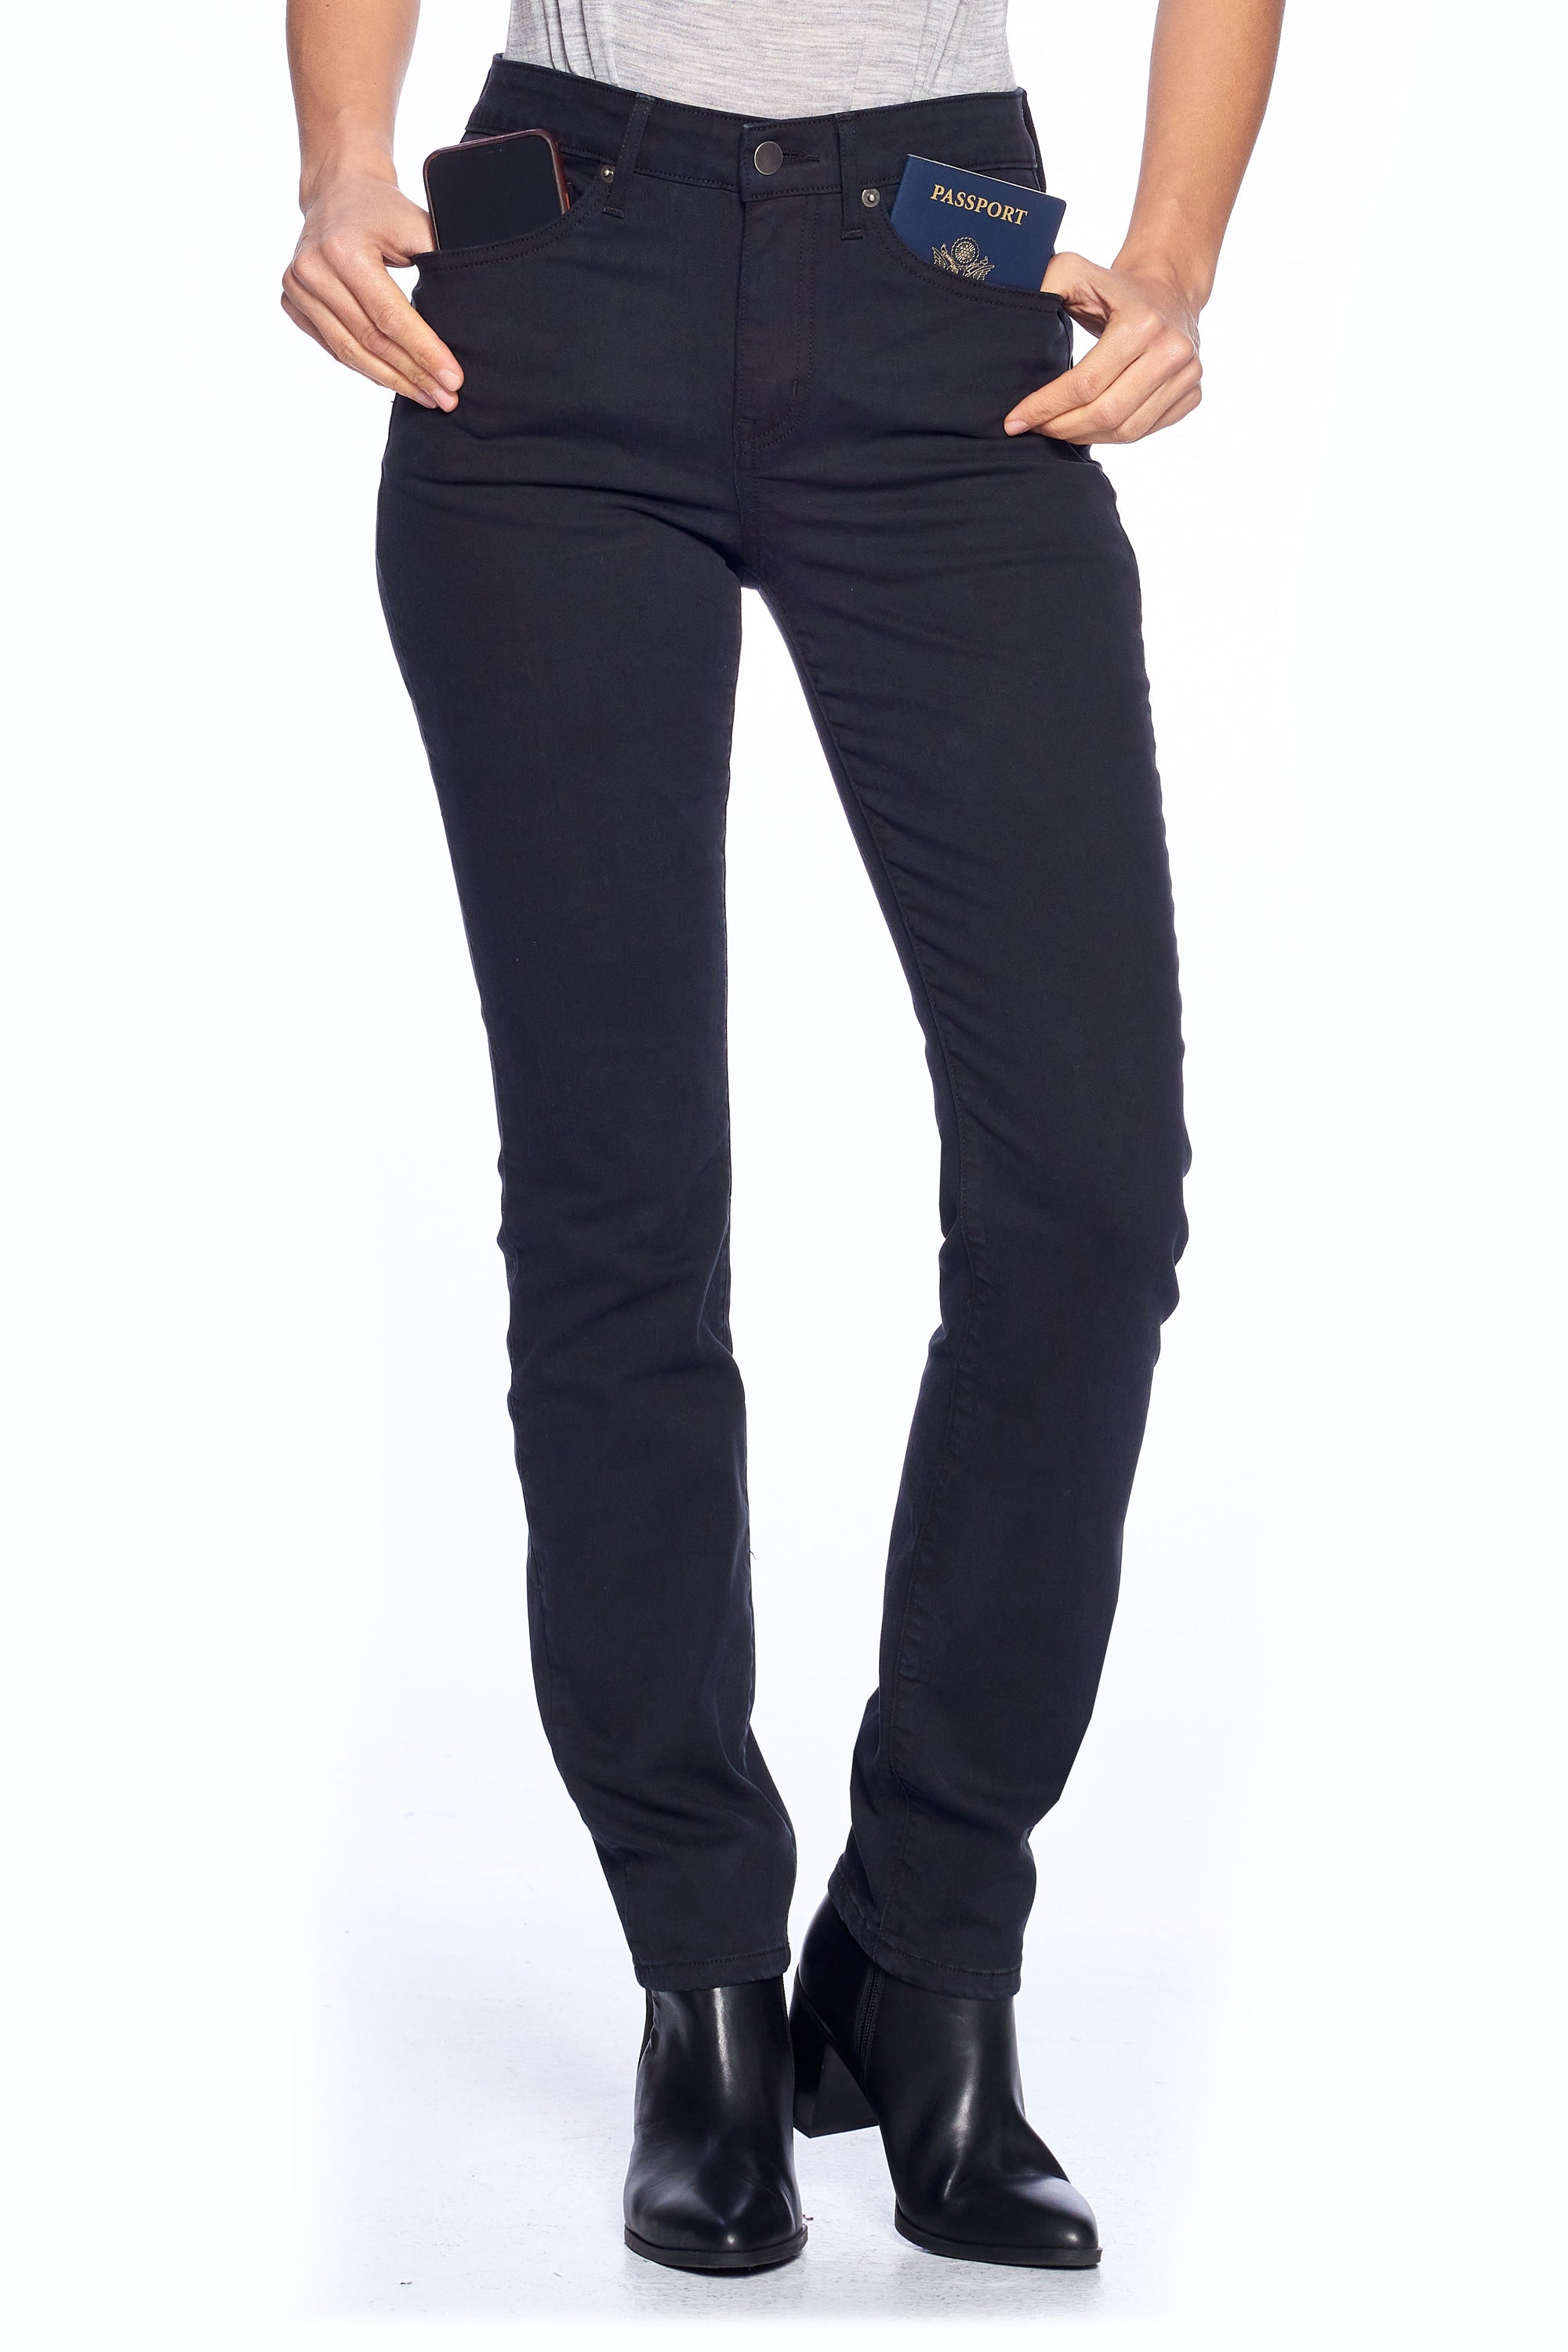 Vintage black slim straight travel jeans by Aviator